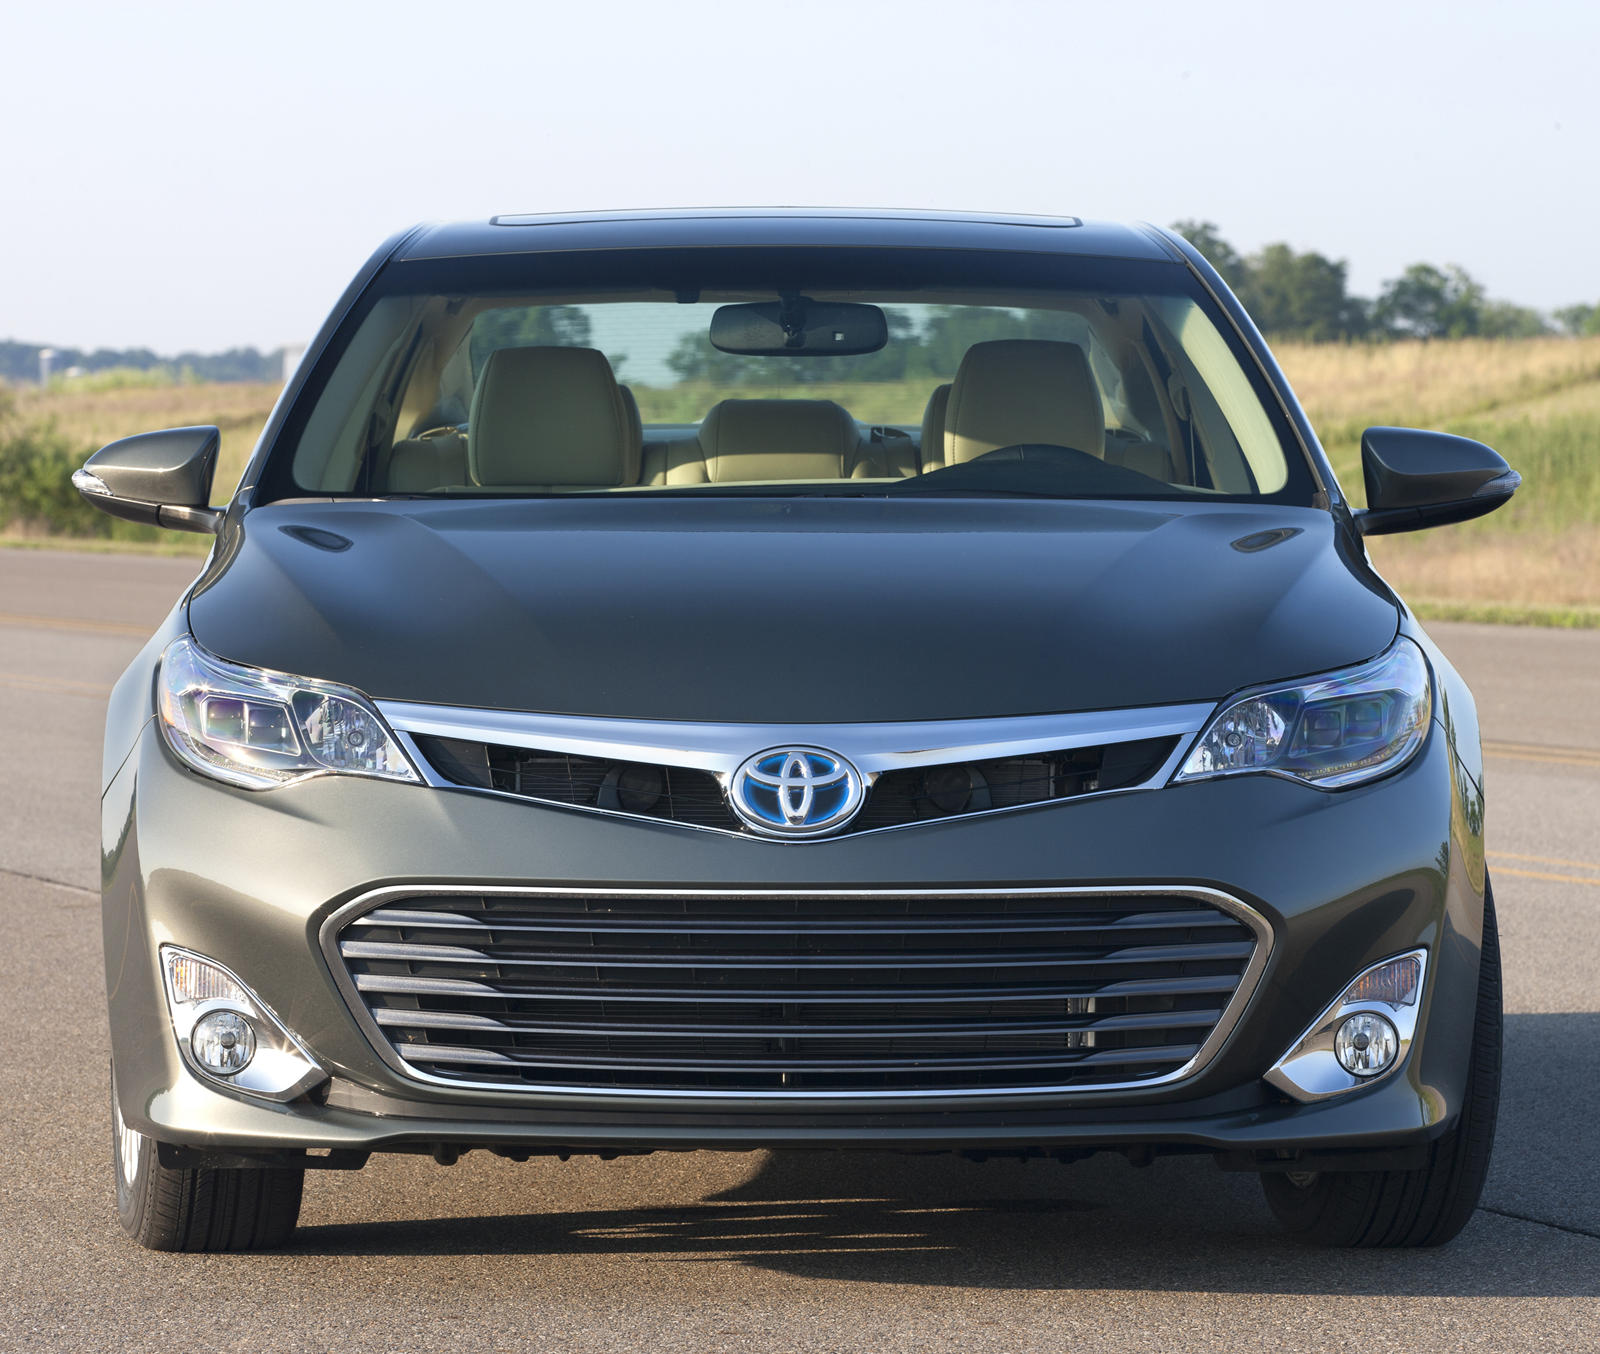 2013 Toyota Avalon Hybrid Front View